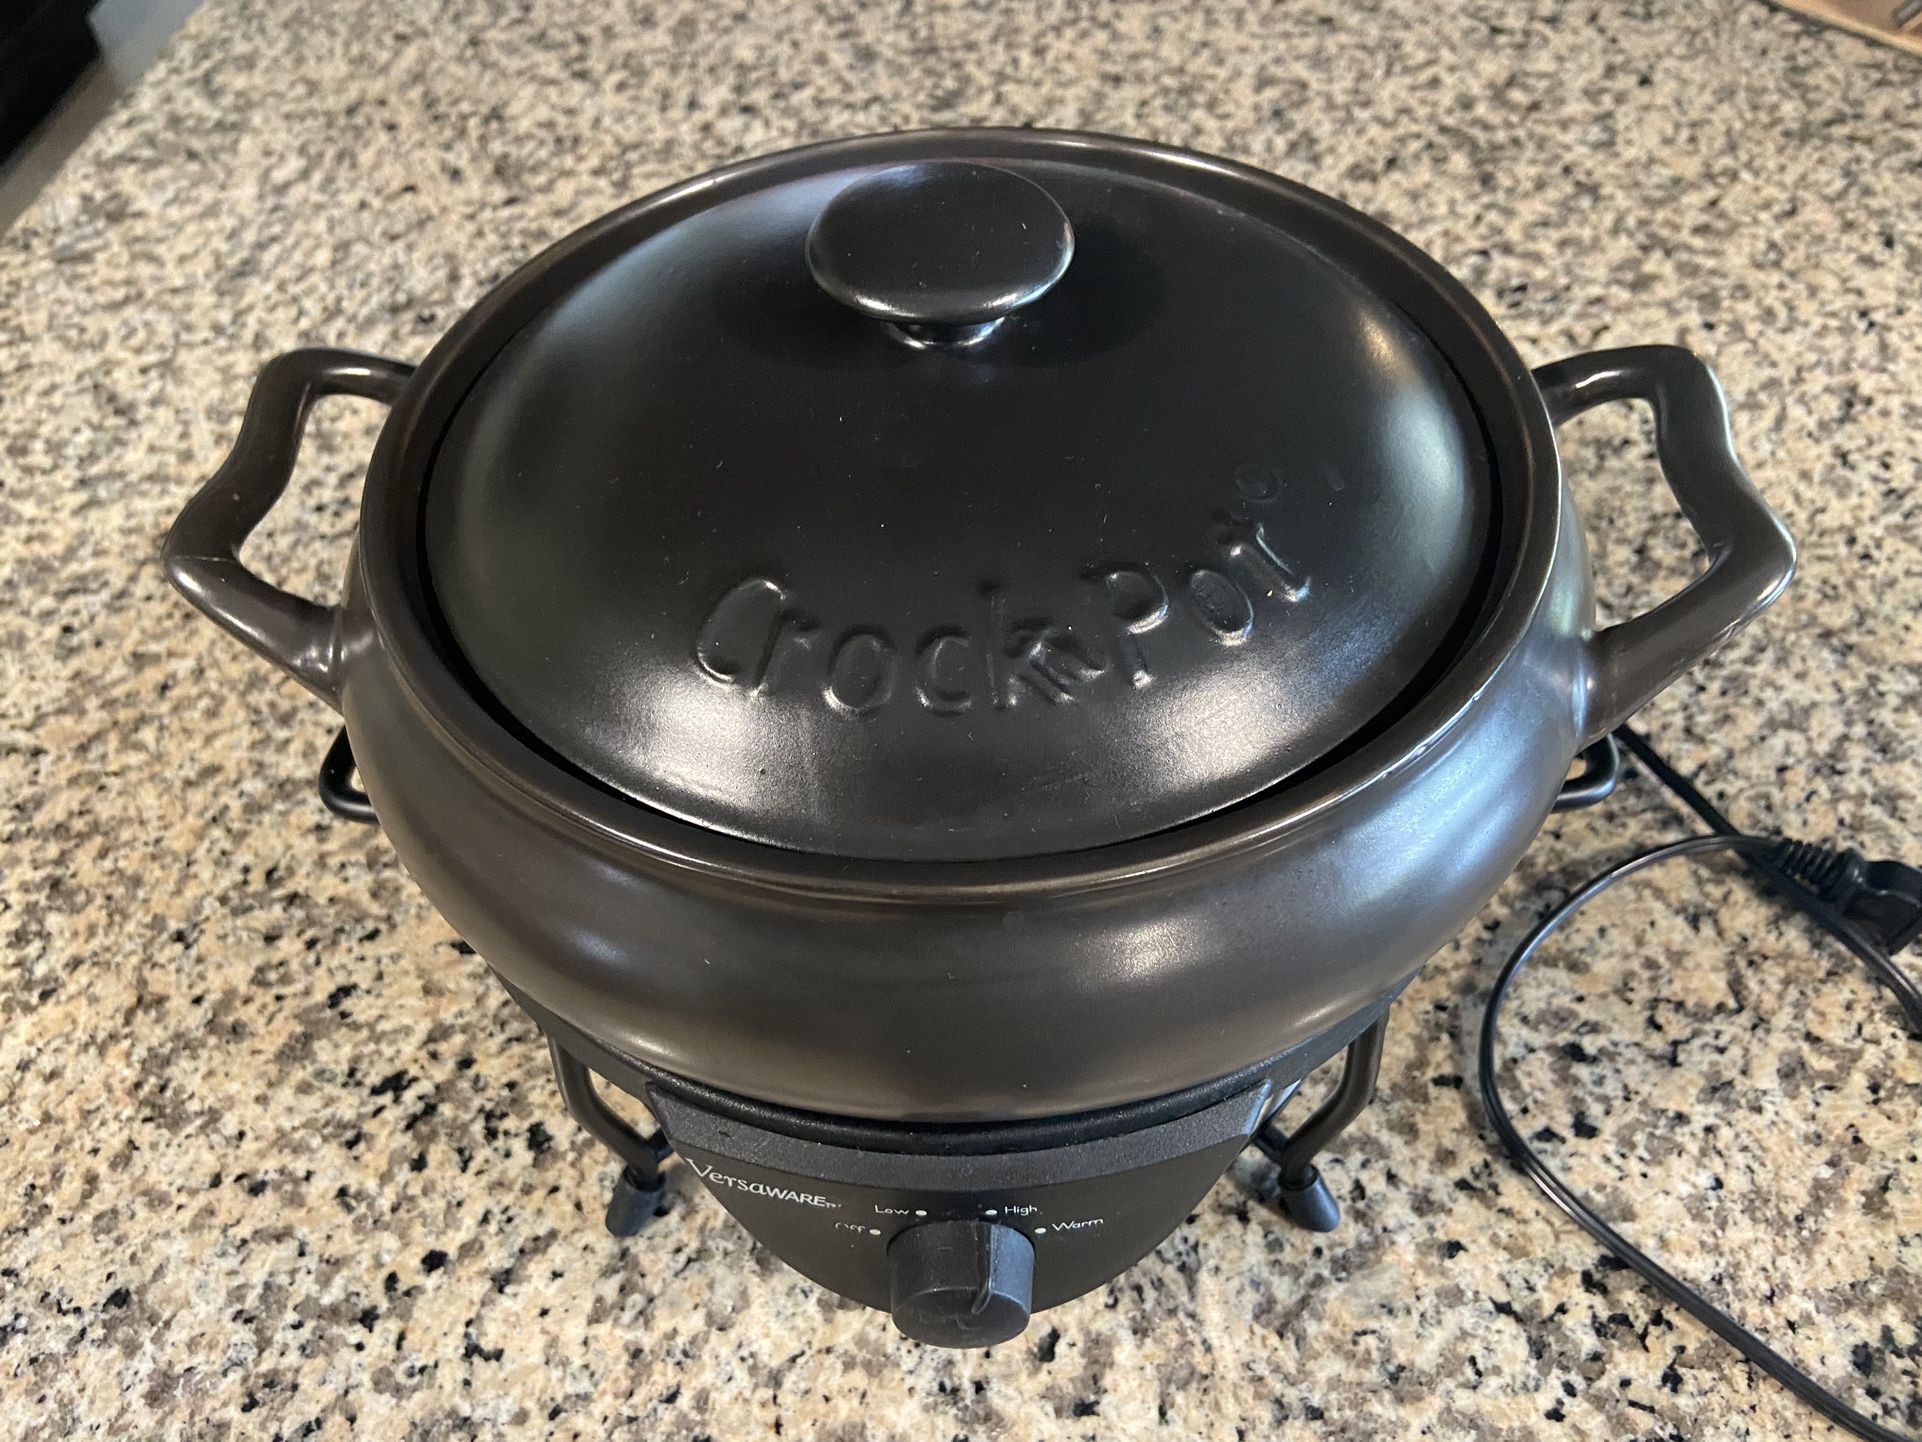 Rival Crock Pot Model 3755 Large Slow Cooker for Sale in Moosic, PA -  OfferUp